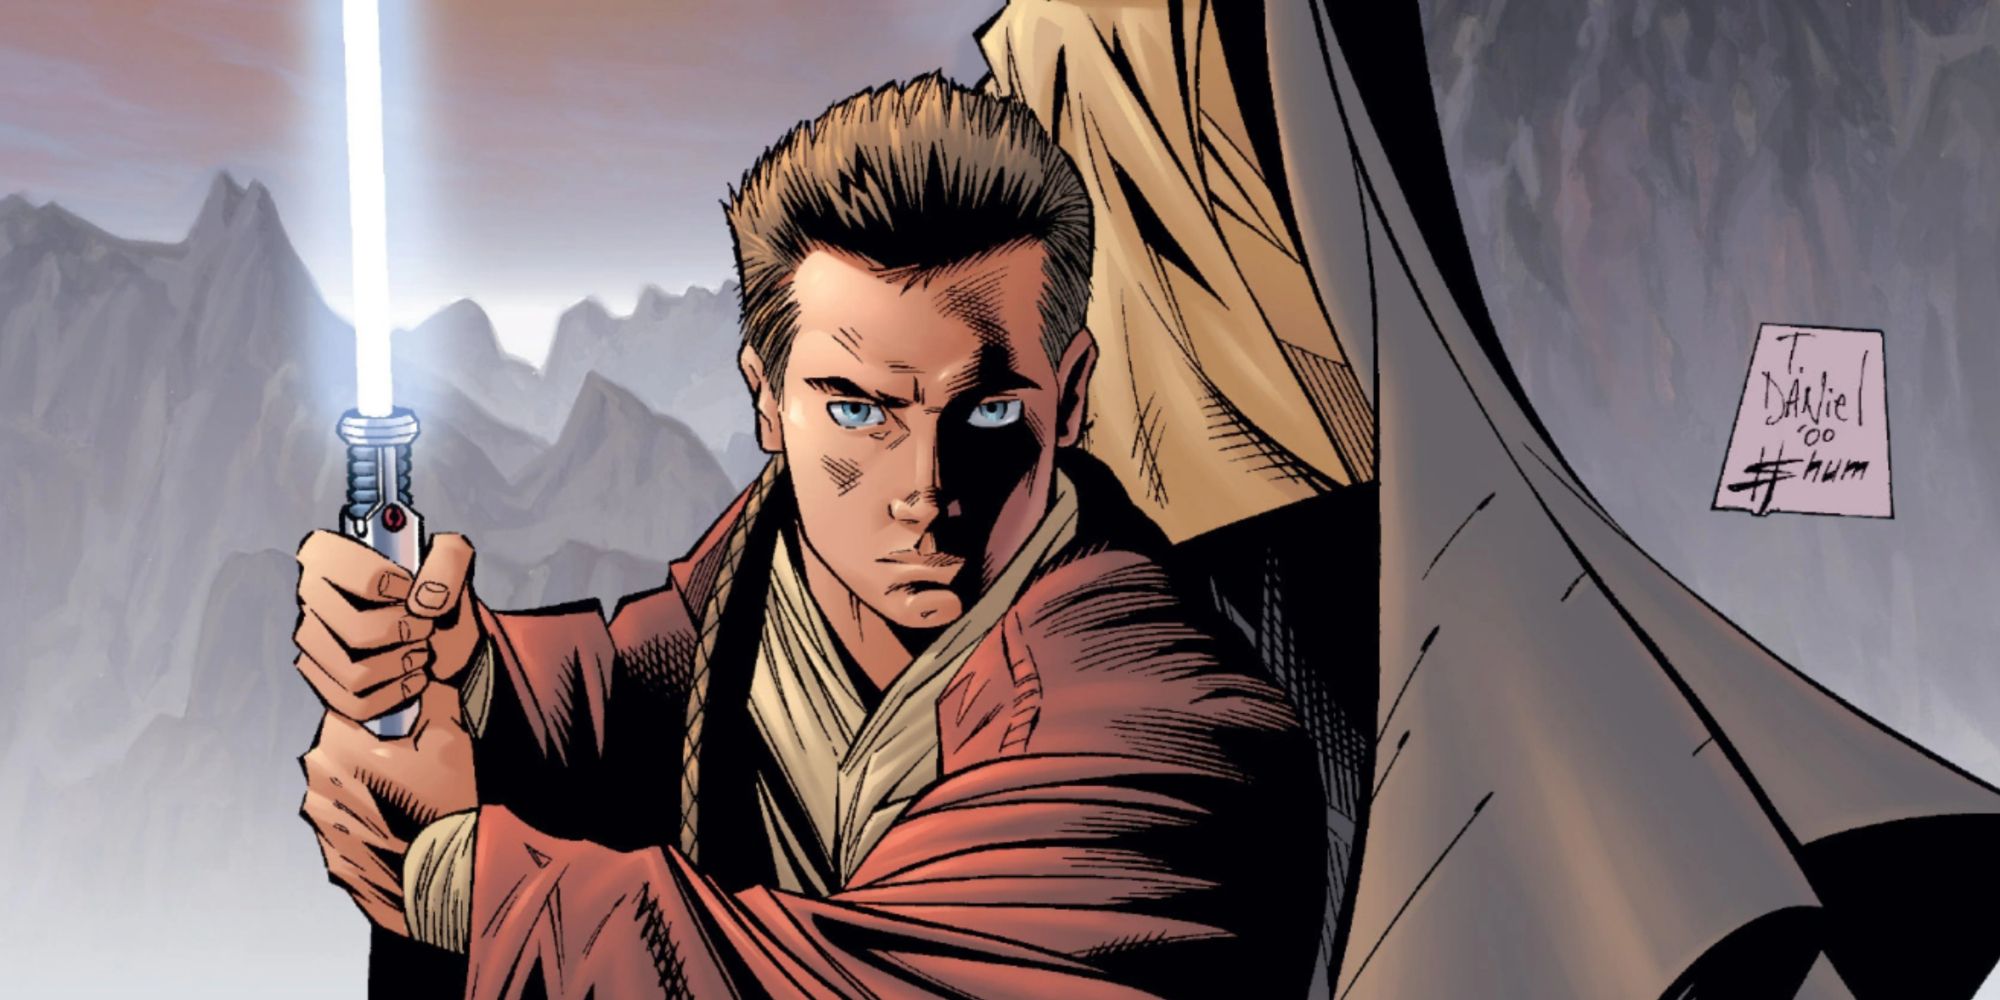 Obi-Wan wields his lightsaber in Star Wars comics.